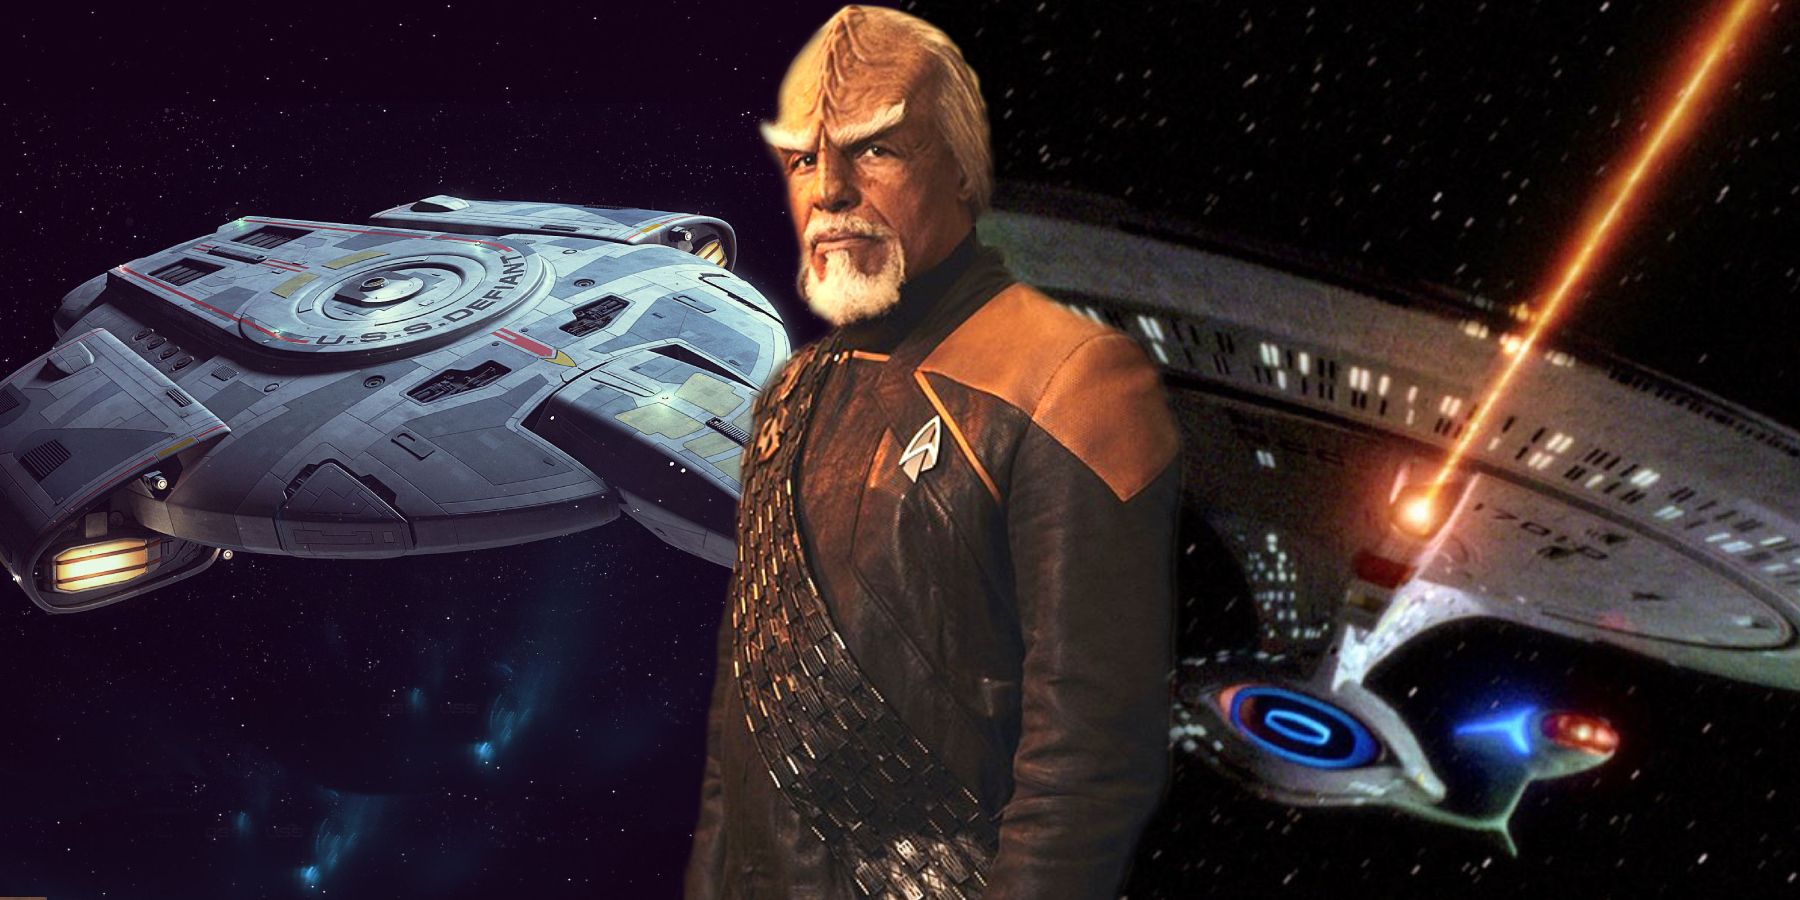 The Defiant, Captain Worf, and the Enterprise-D